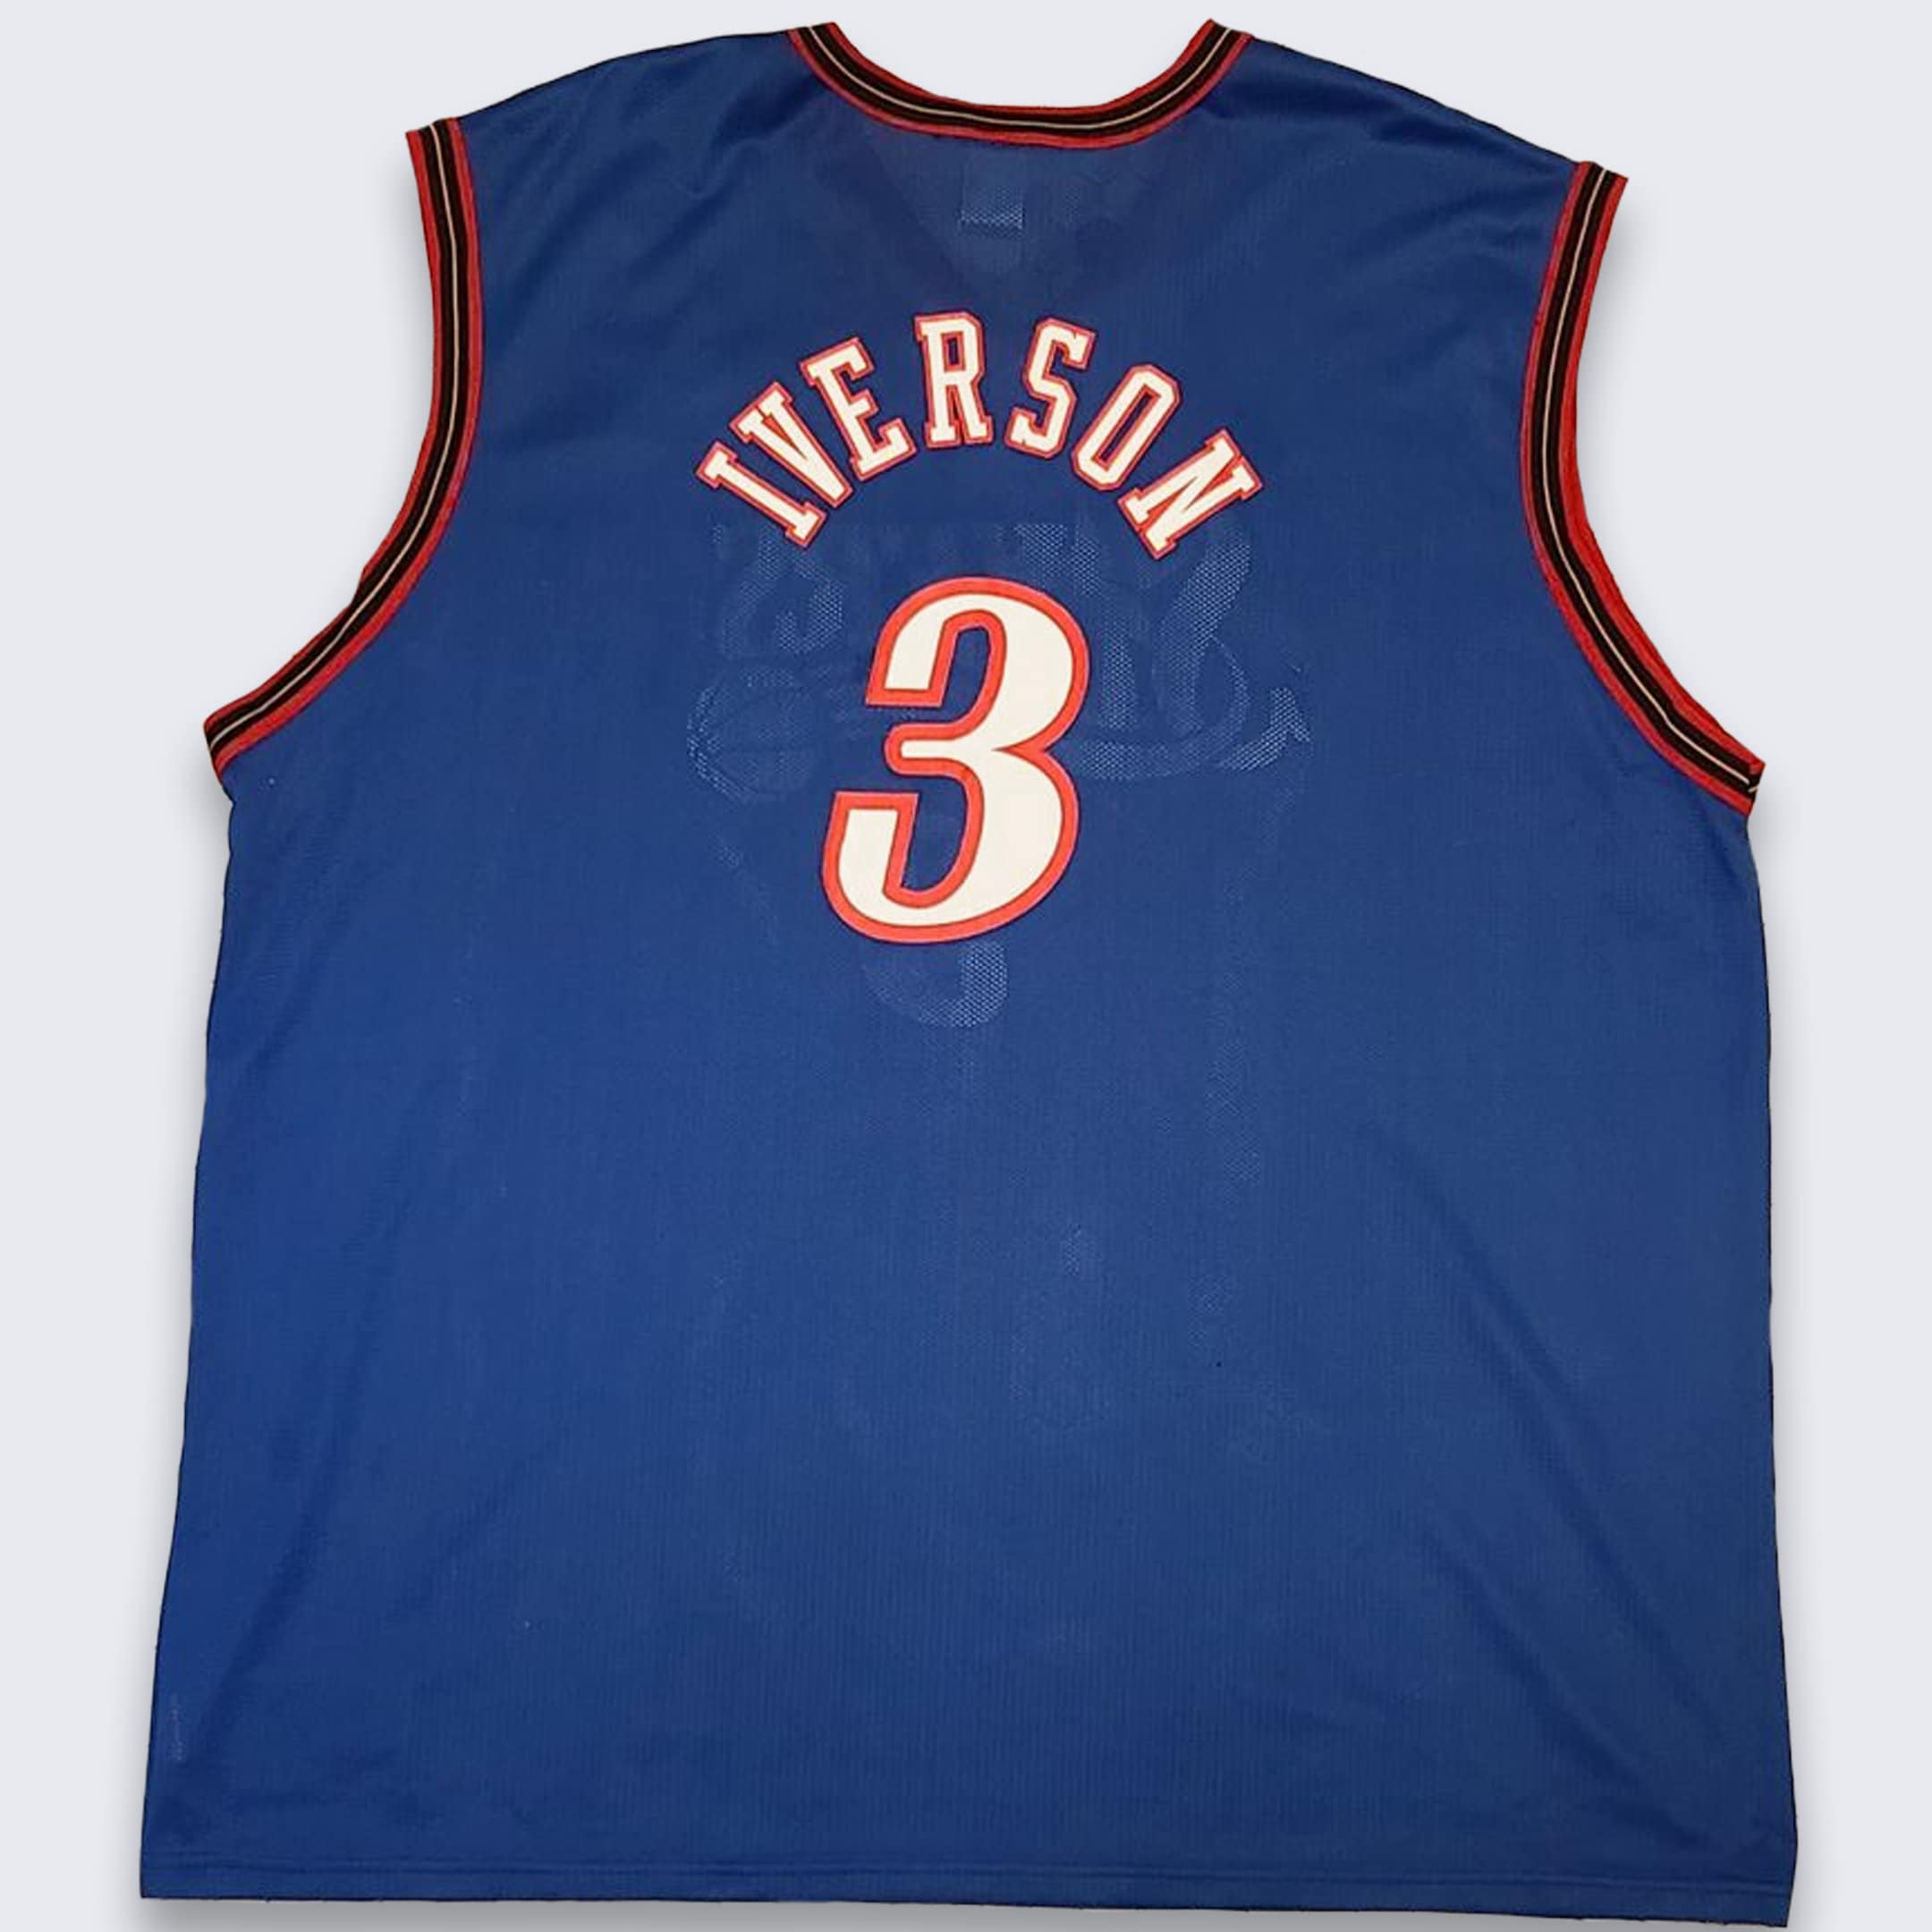 CHAMPION NBA #3 IVERSON PHILADELPHIA 76ERS JERSEY